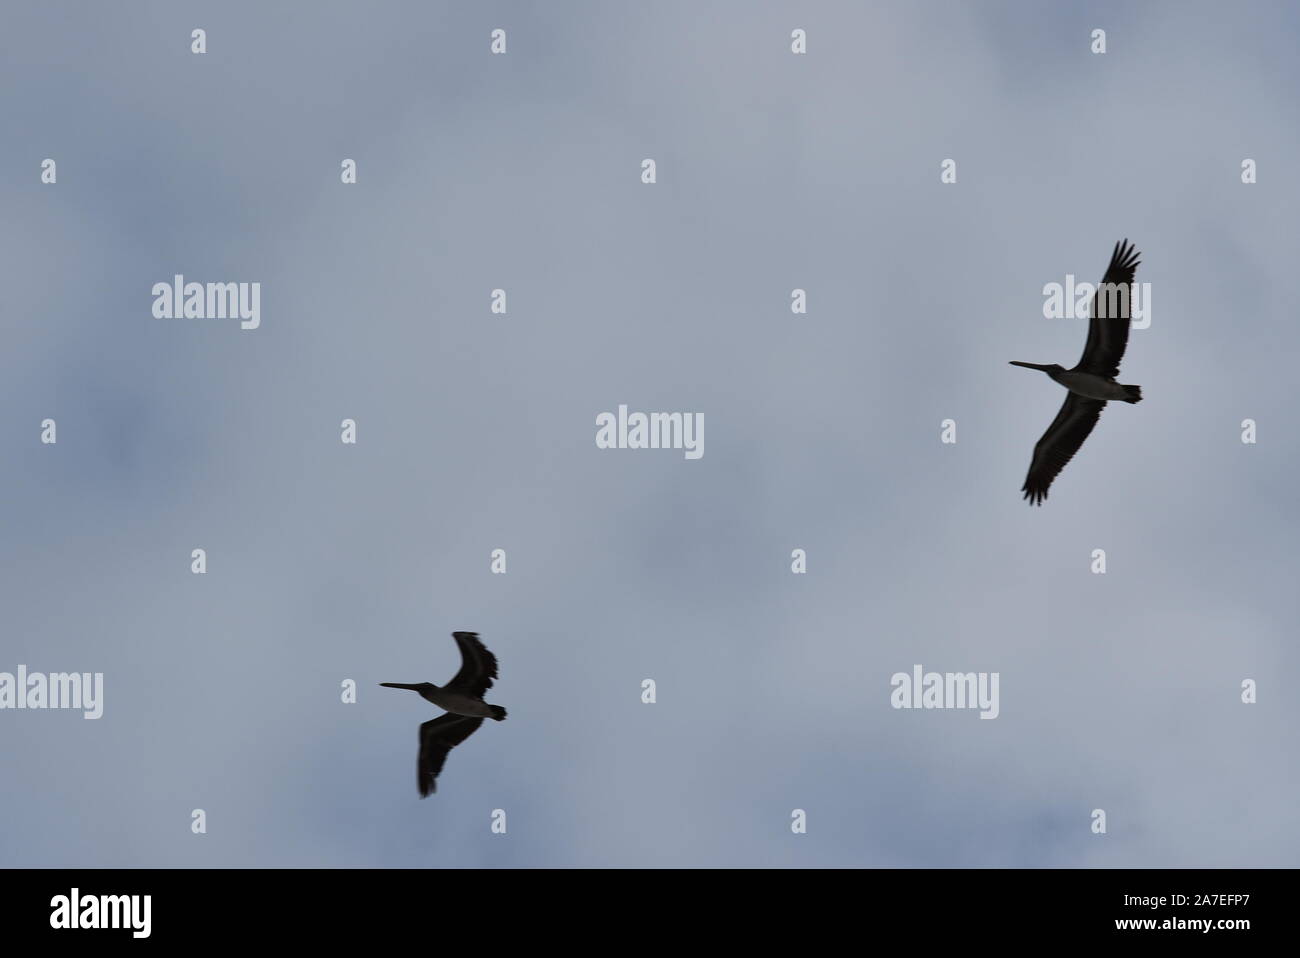 Birds flying on a cloudy sky Stock Photo